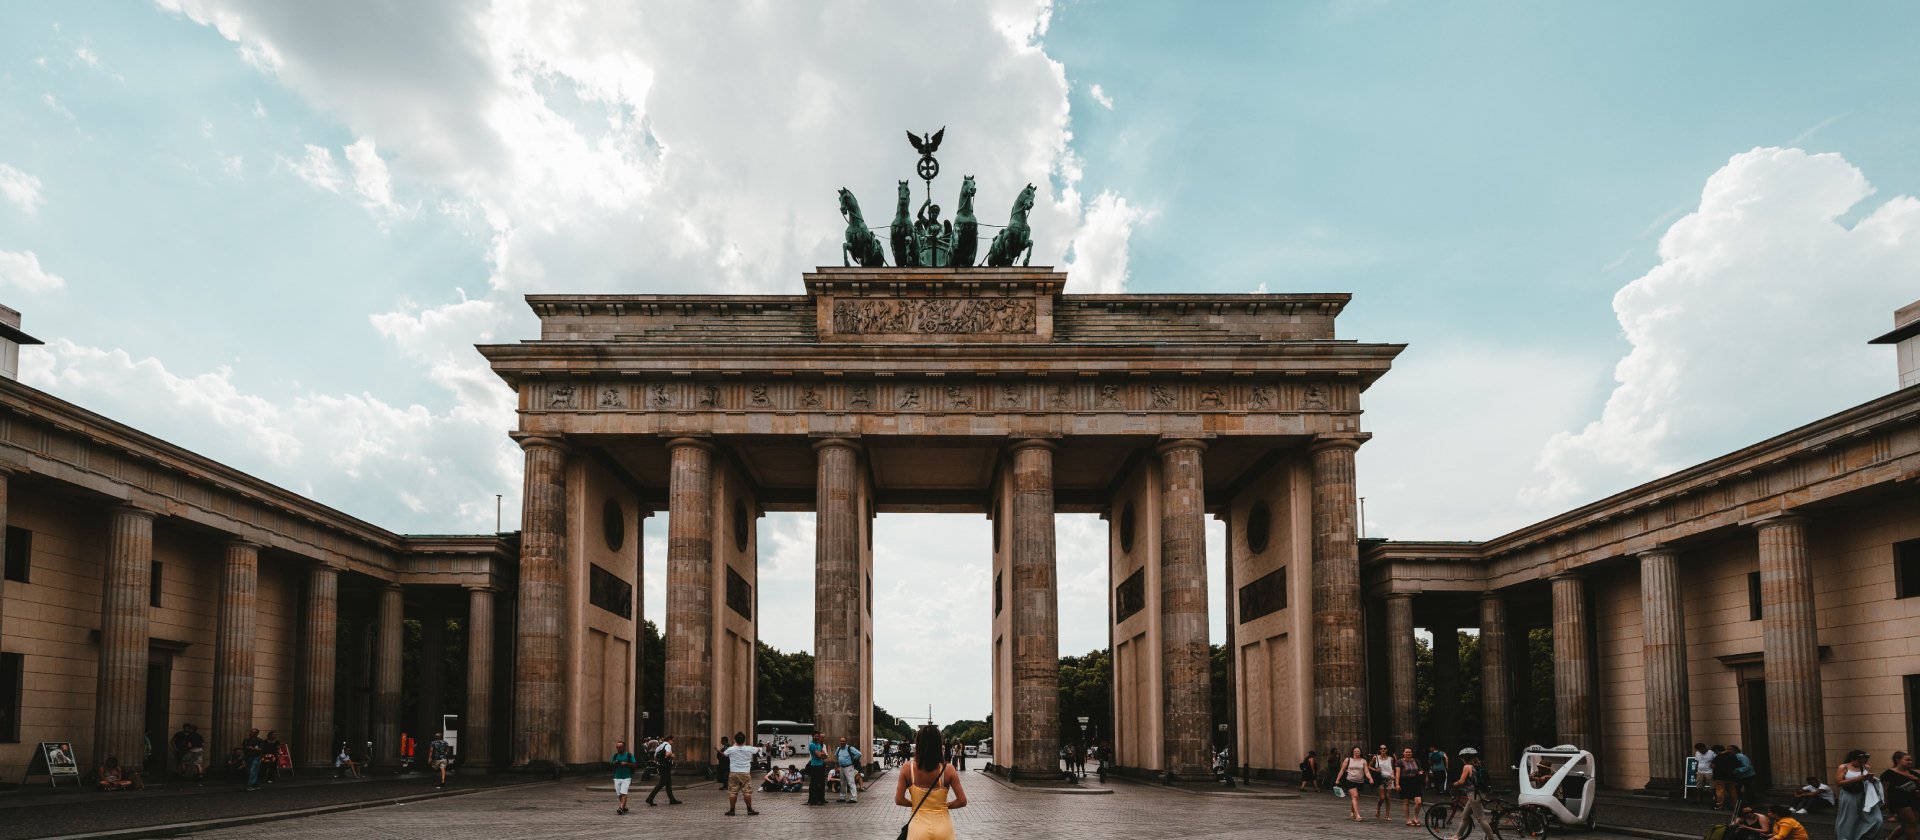 View of the Brandenburg Gate in Berlin